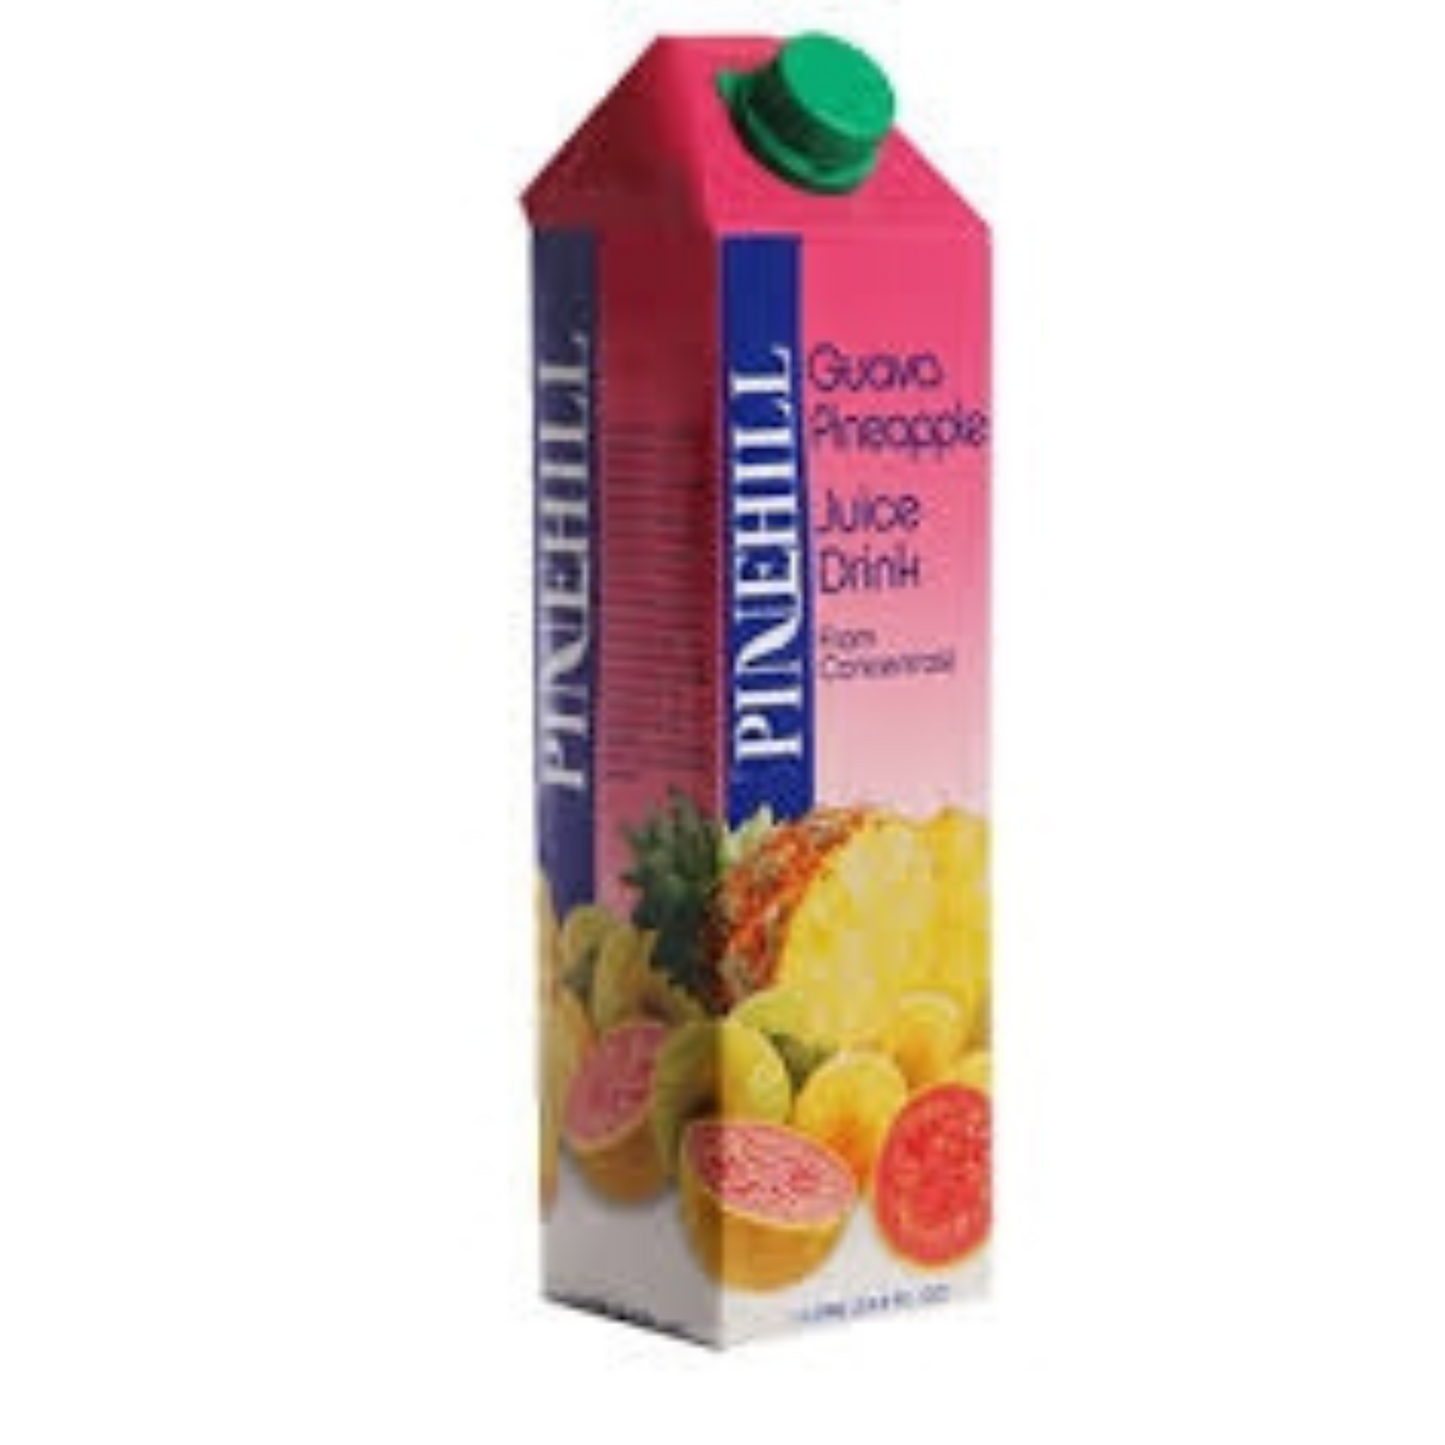 Pinehill Guava Pineapple Juice Drink - 1L